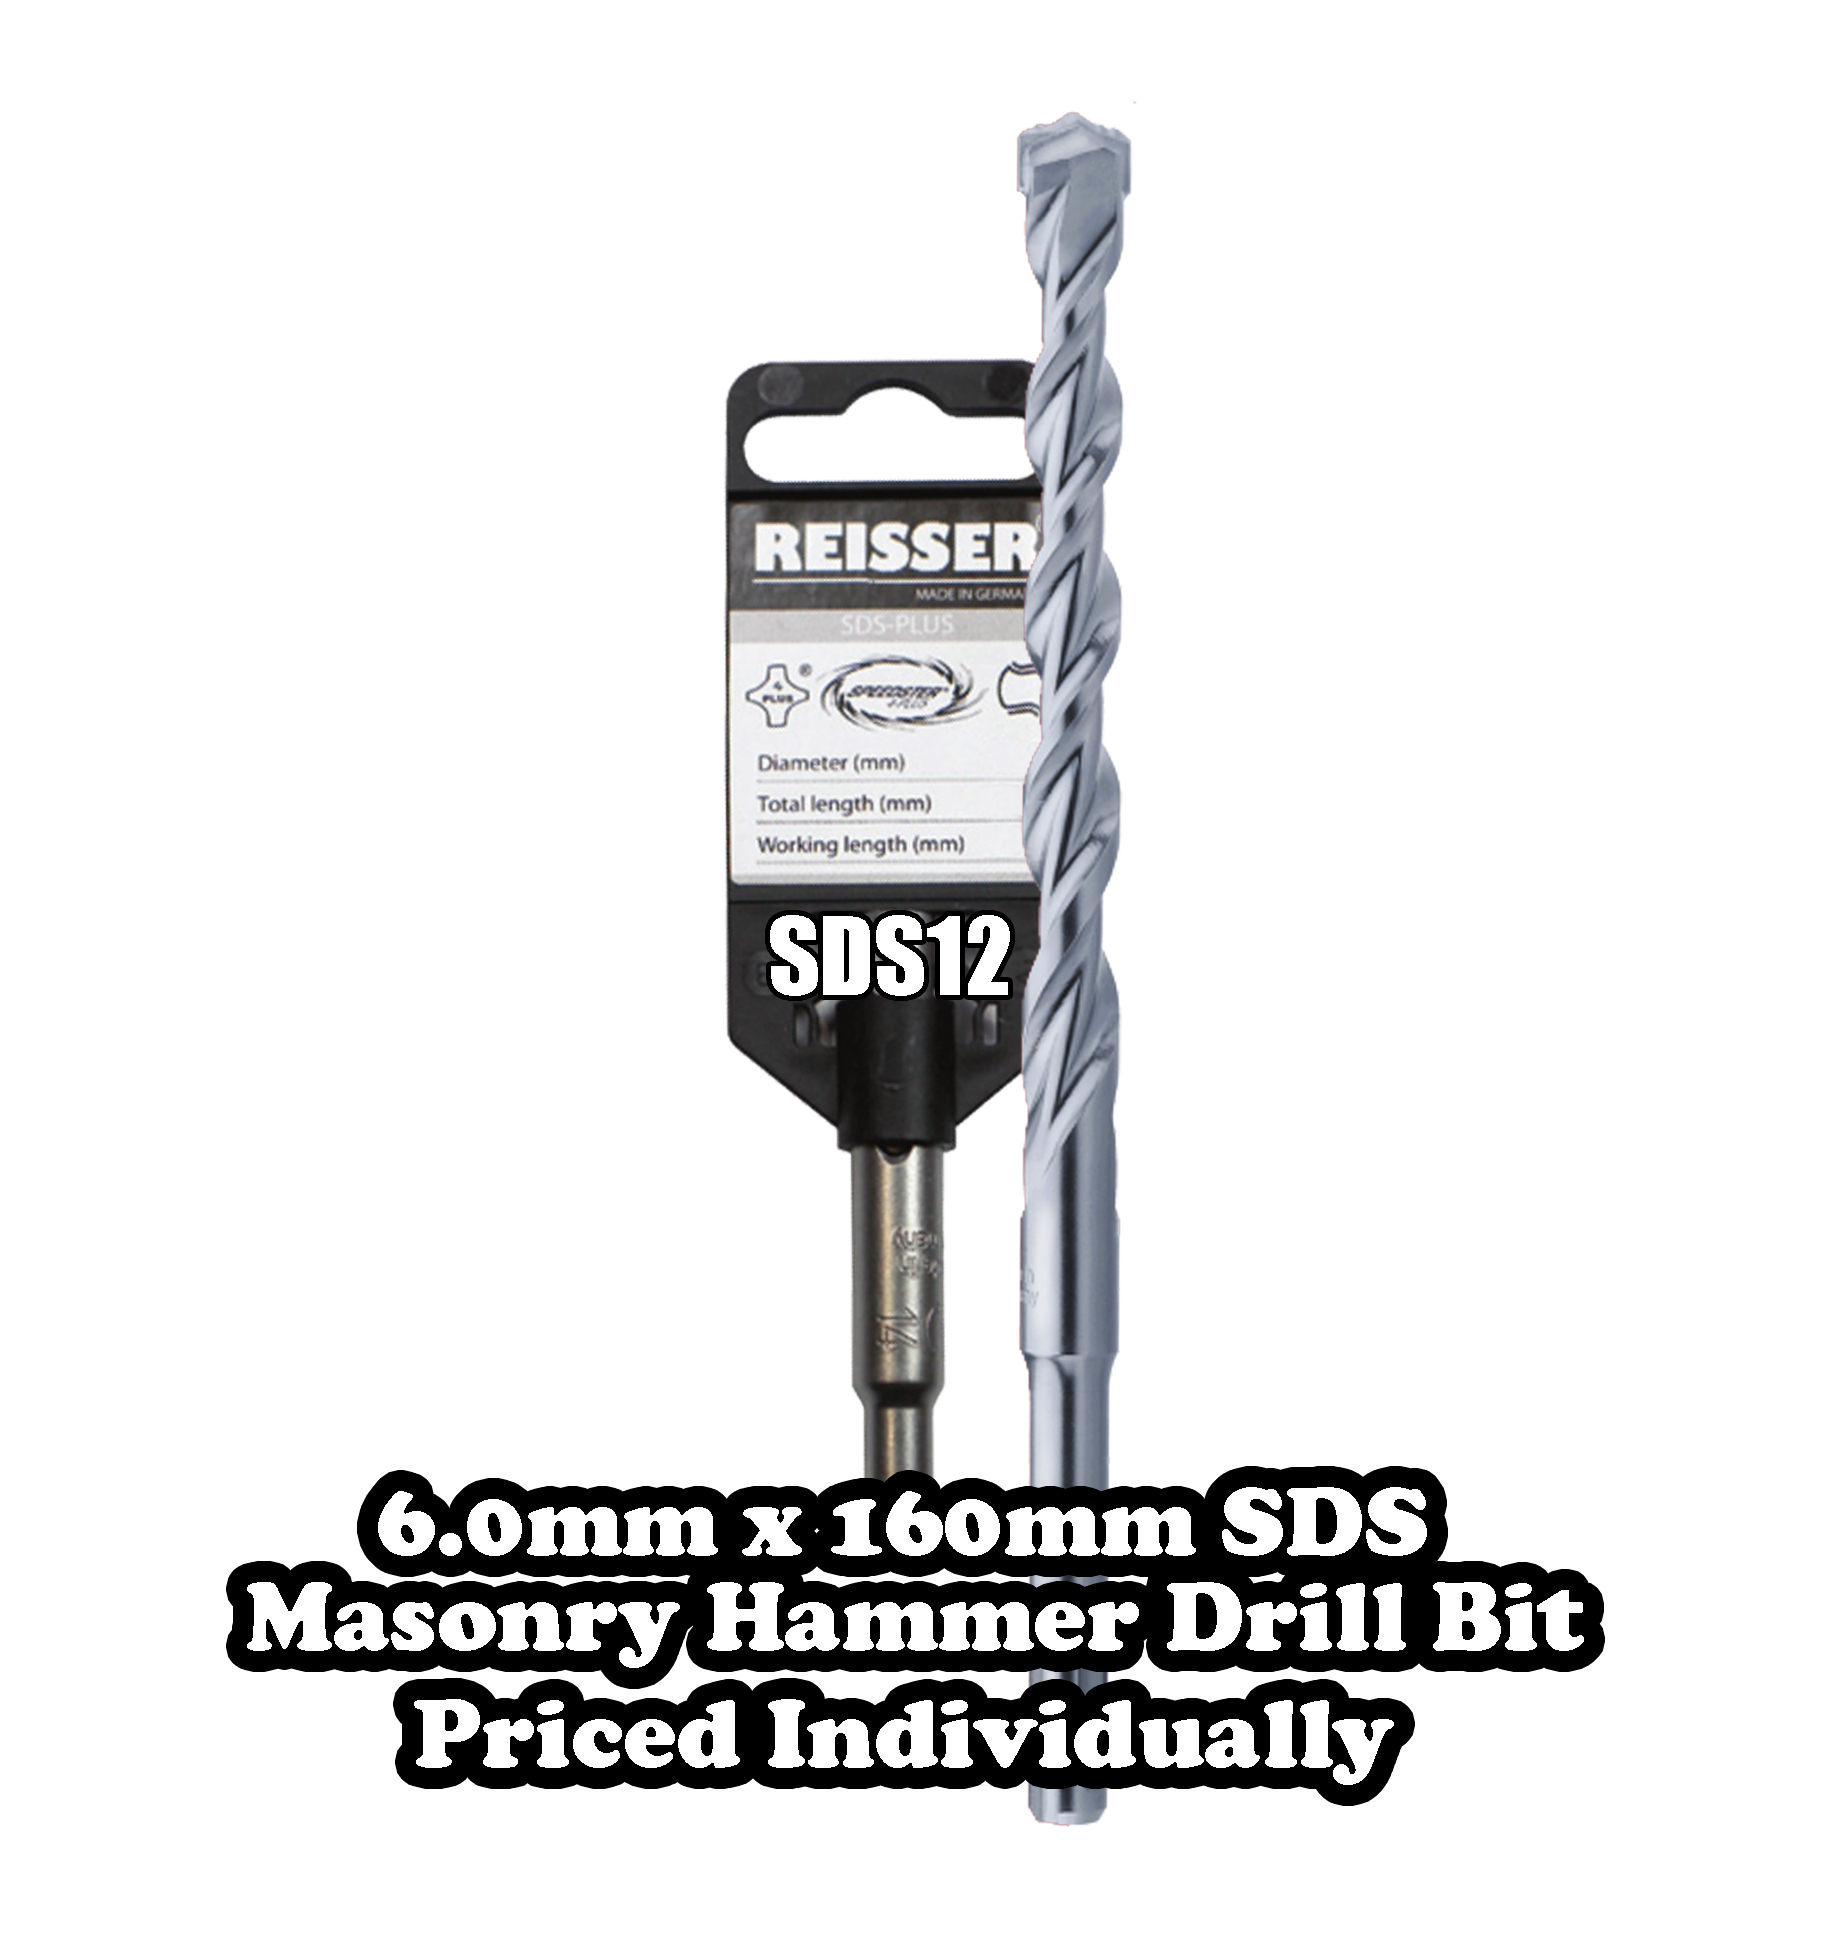 6.0mm x 160mm SDSMasonry  Hammer Drill Bit